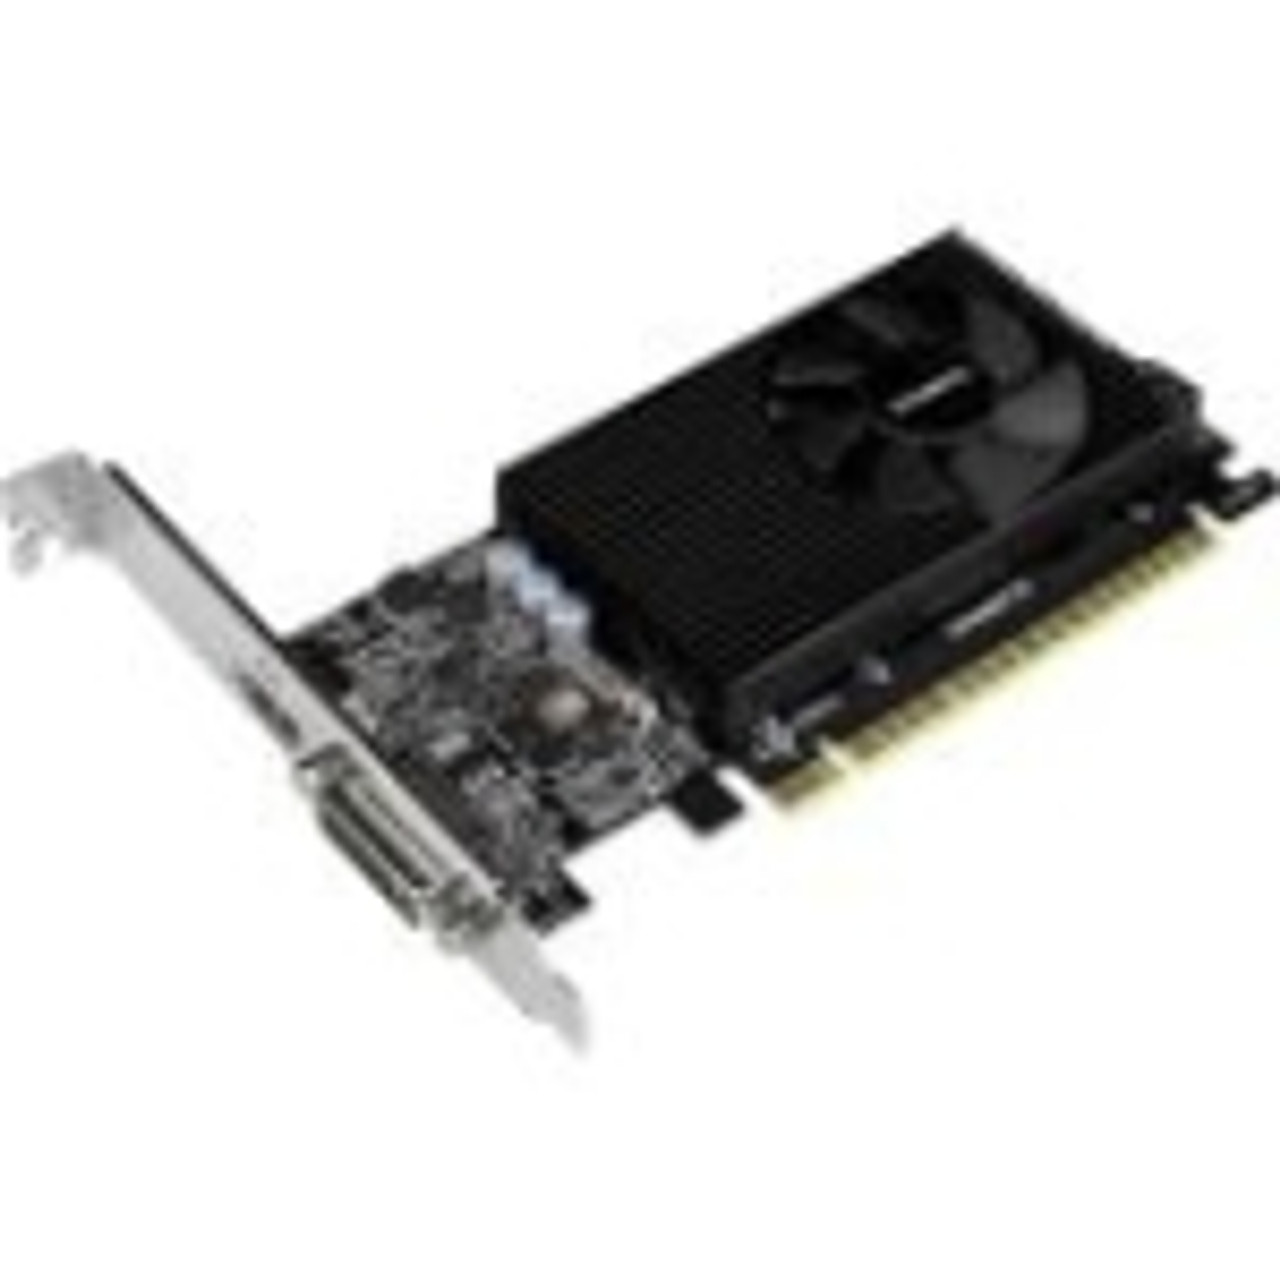 NVIDIA Geforce GT 730 2GB DDR3 PCI Express Video Graphics Card HMDI DVI